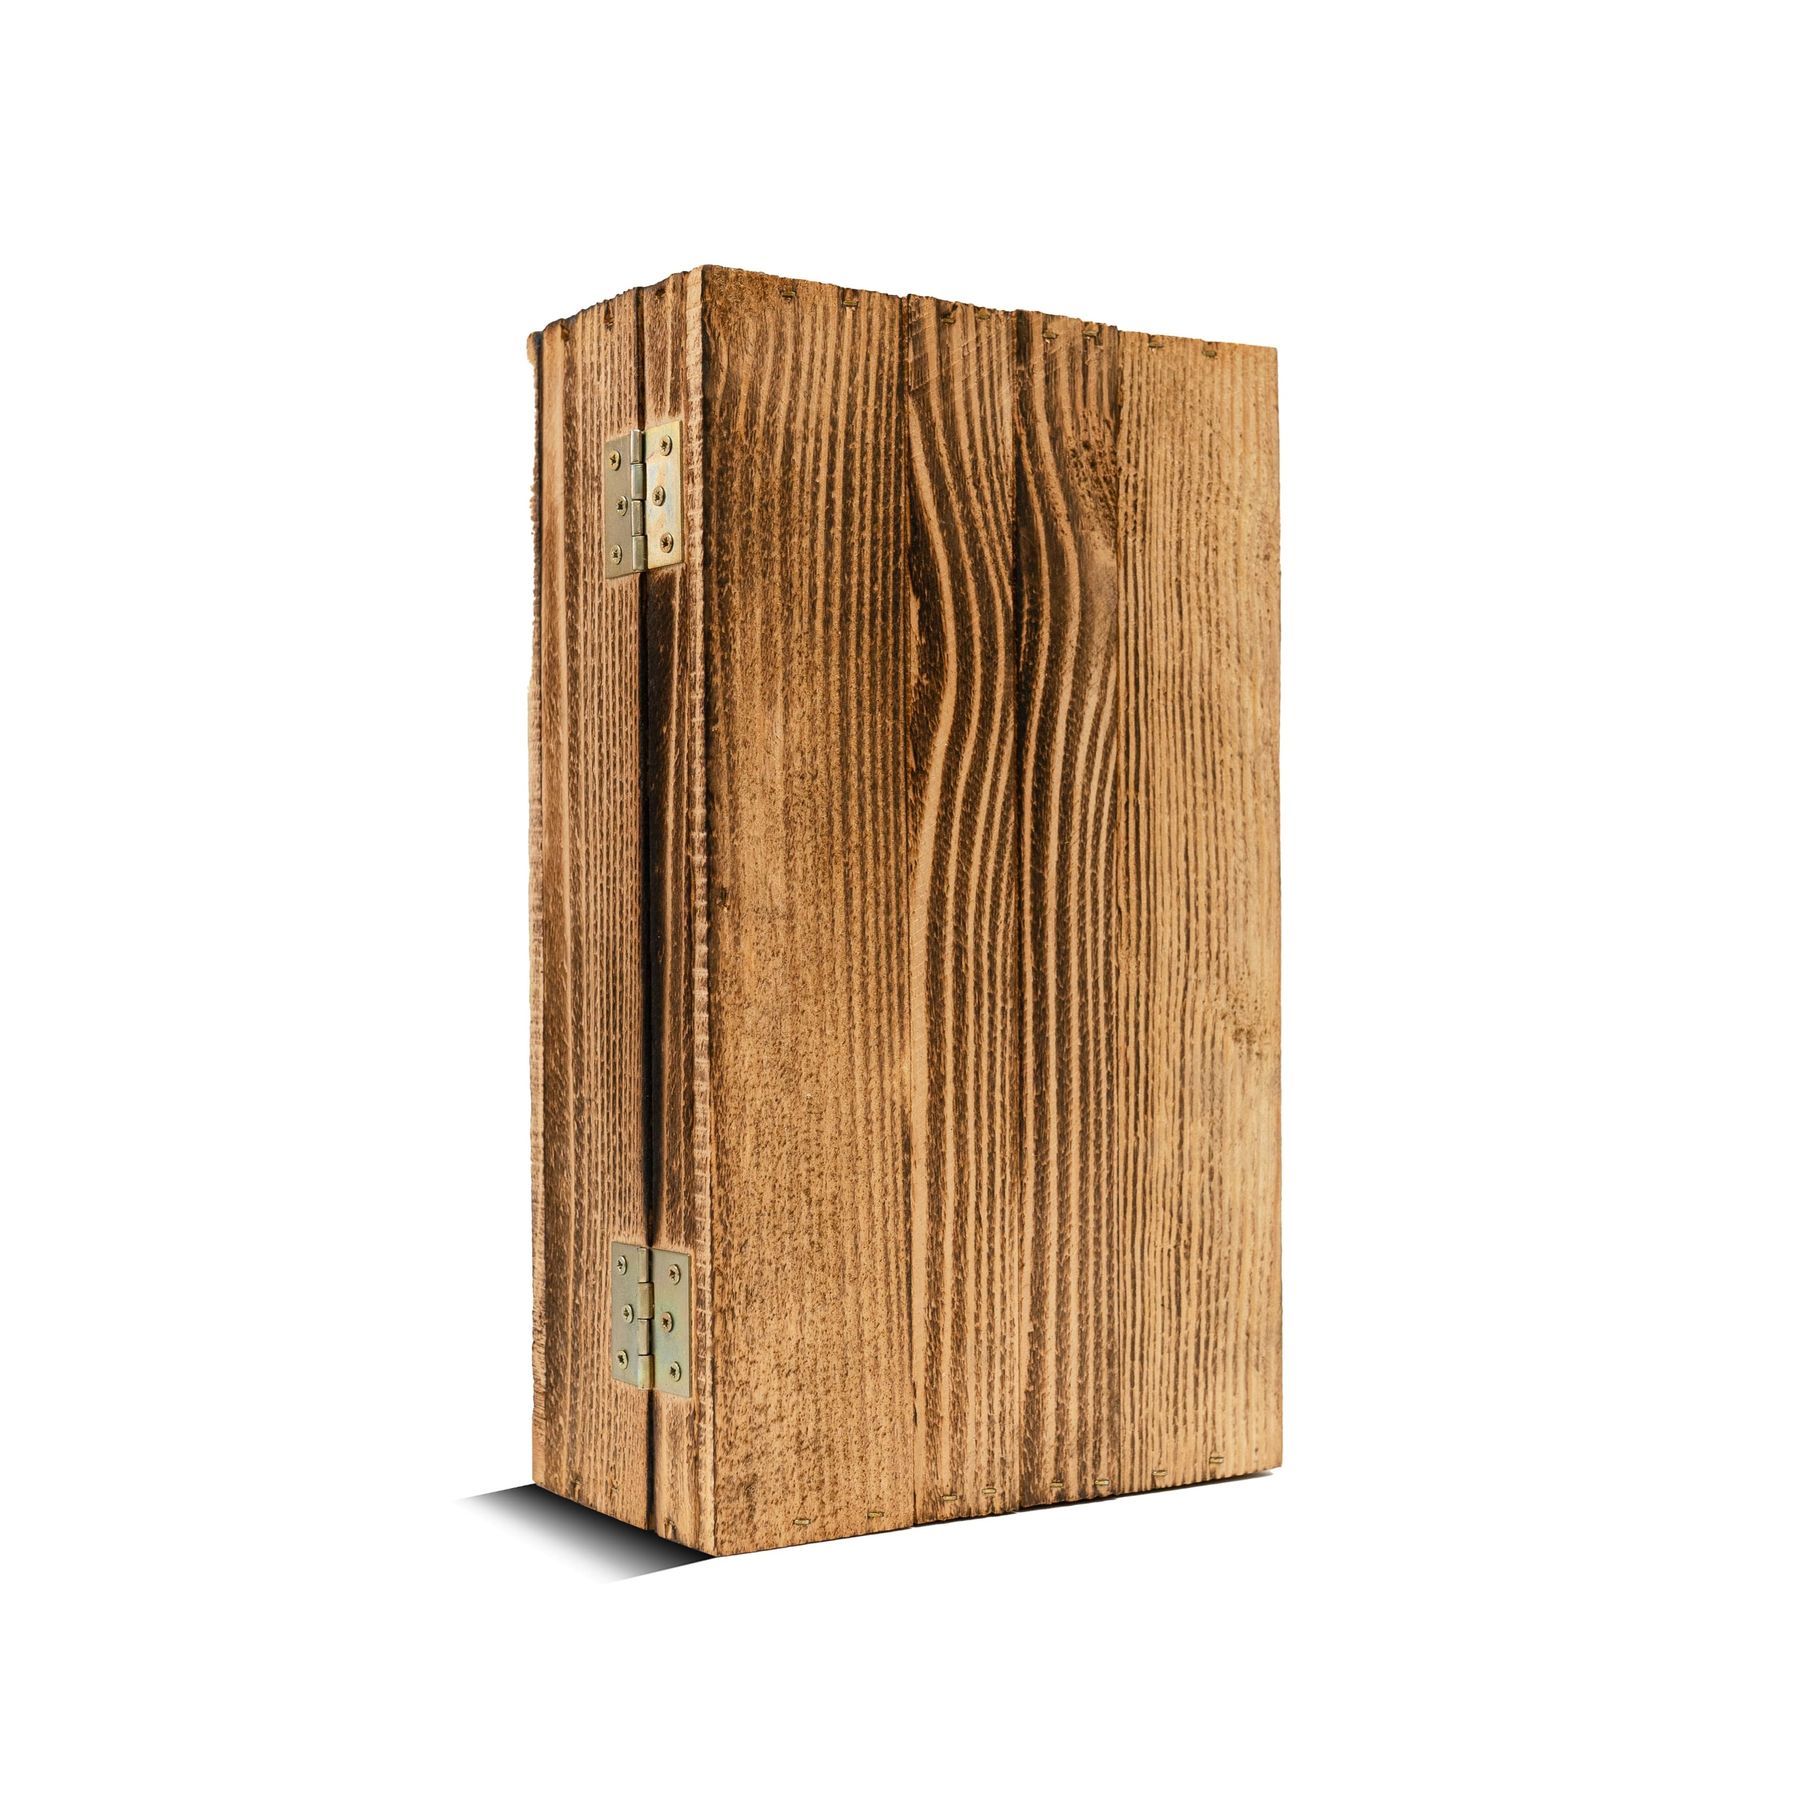 Wooden gift box "wooden box" - 35-21-10